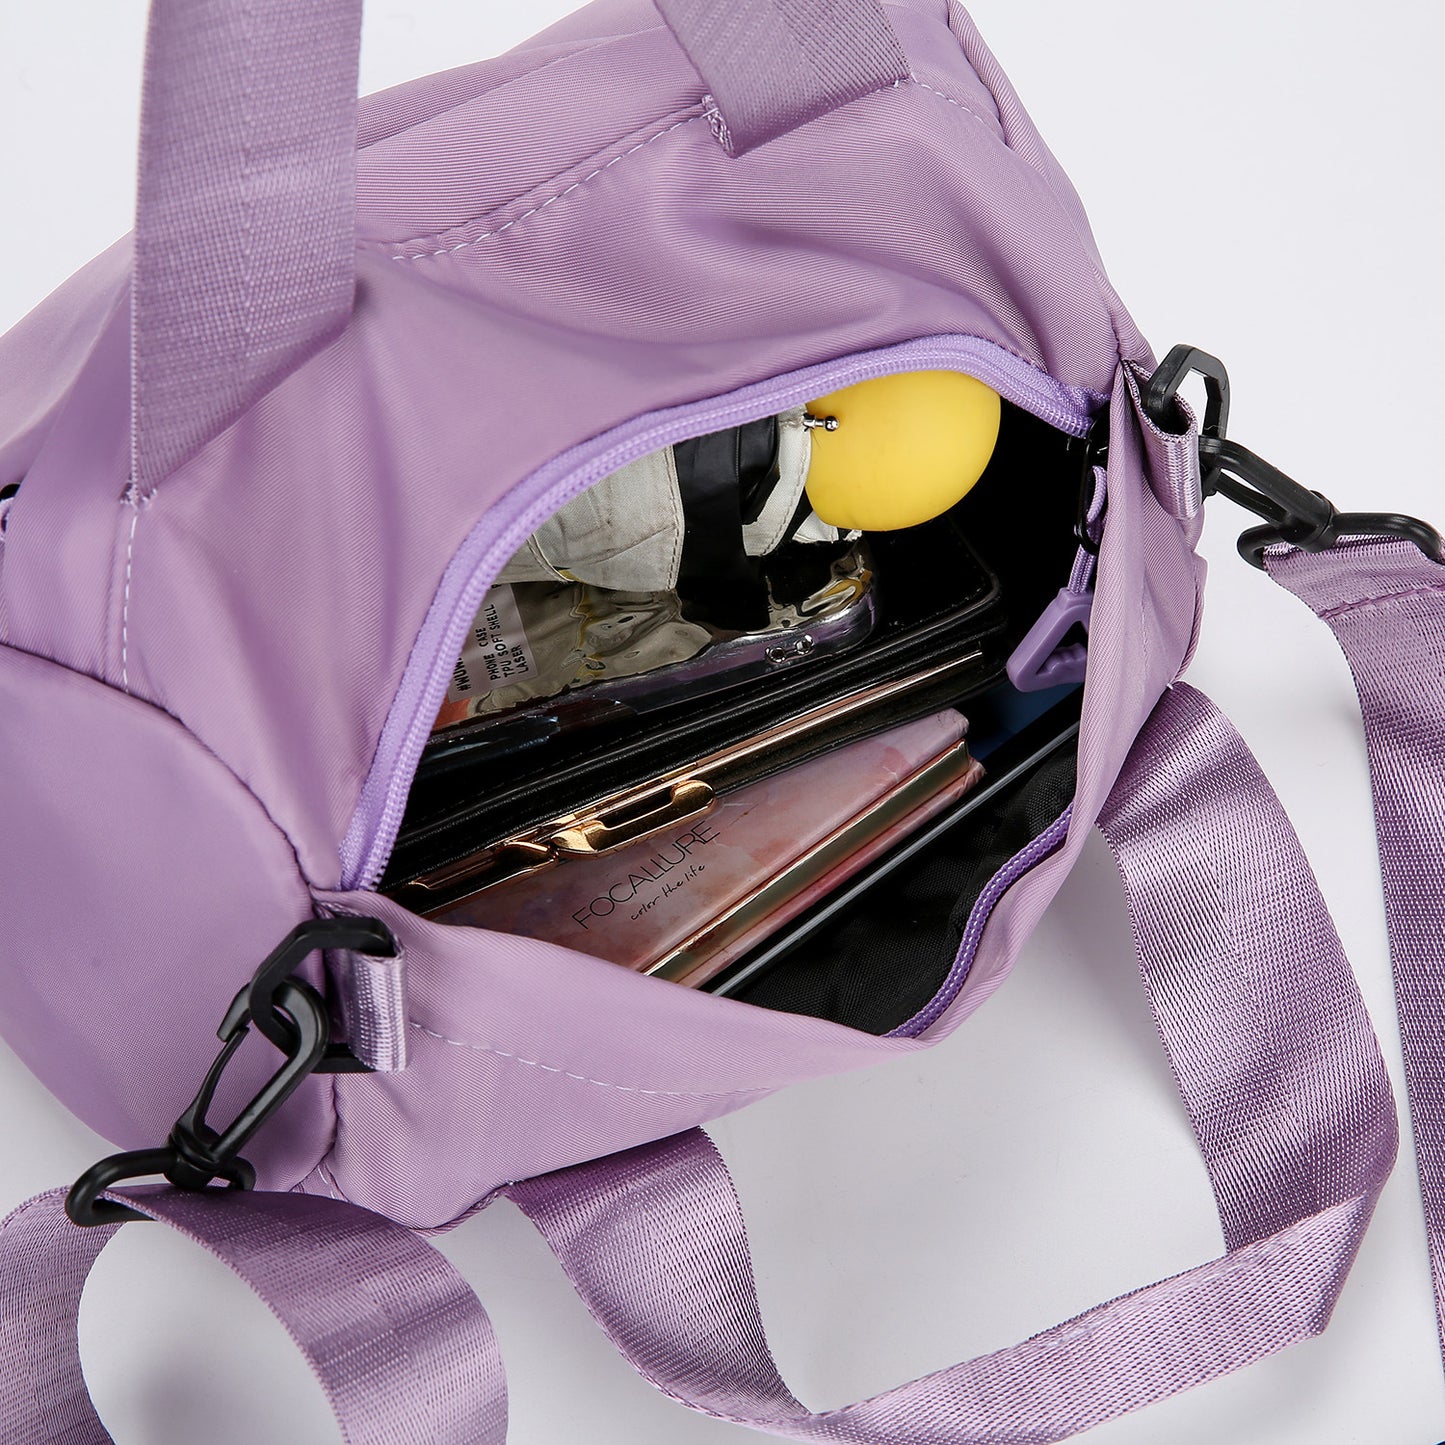 "Stylish & Casual: Oxford Cloth Shoulder Messenger Handbag"